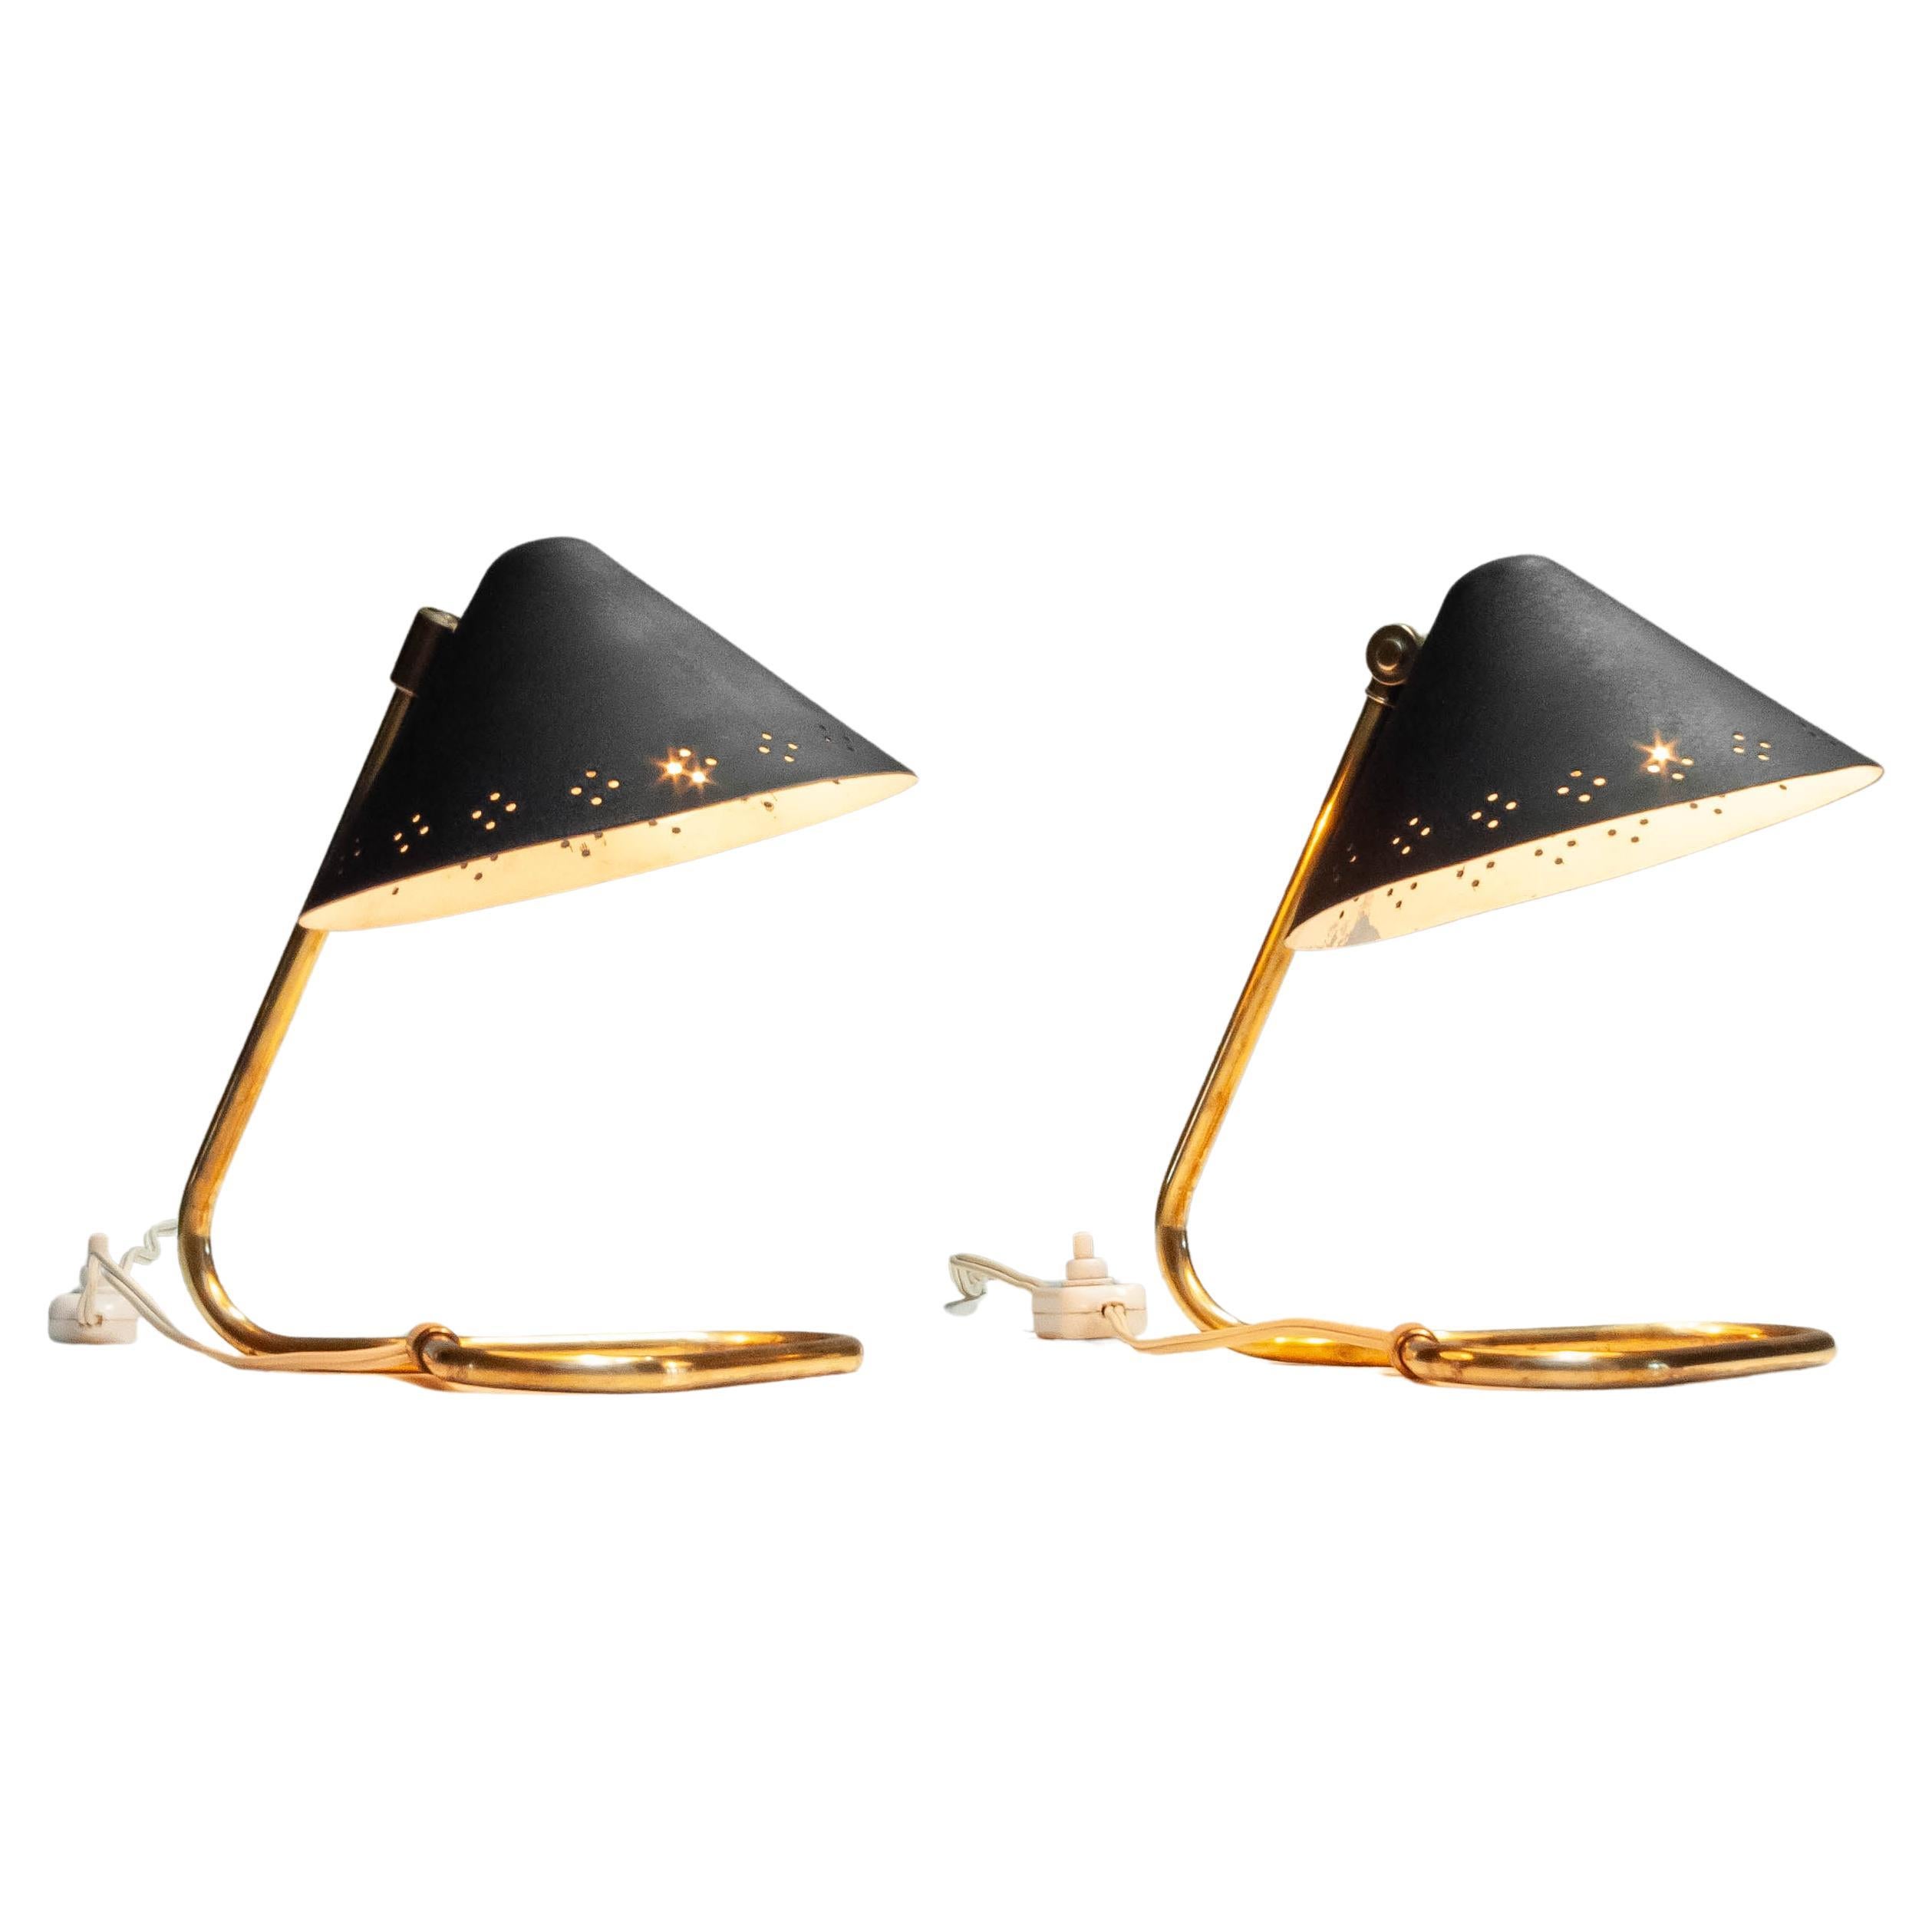 1950s Pair Black With Brass 'Model GK14' Table Lamps By Erik Wärnå For Gnosjö For Sale